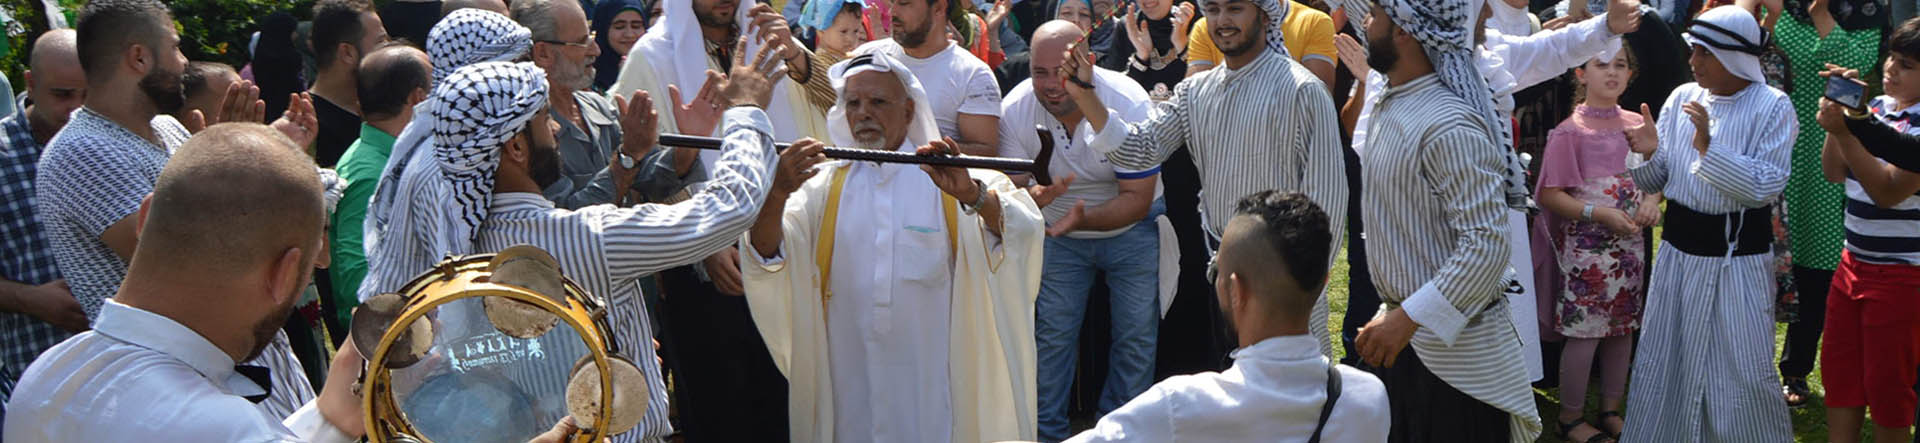 Traditional Palestinian Wedding